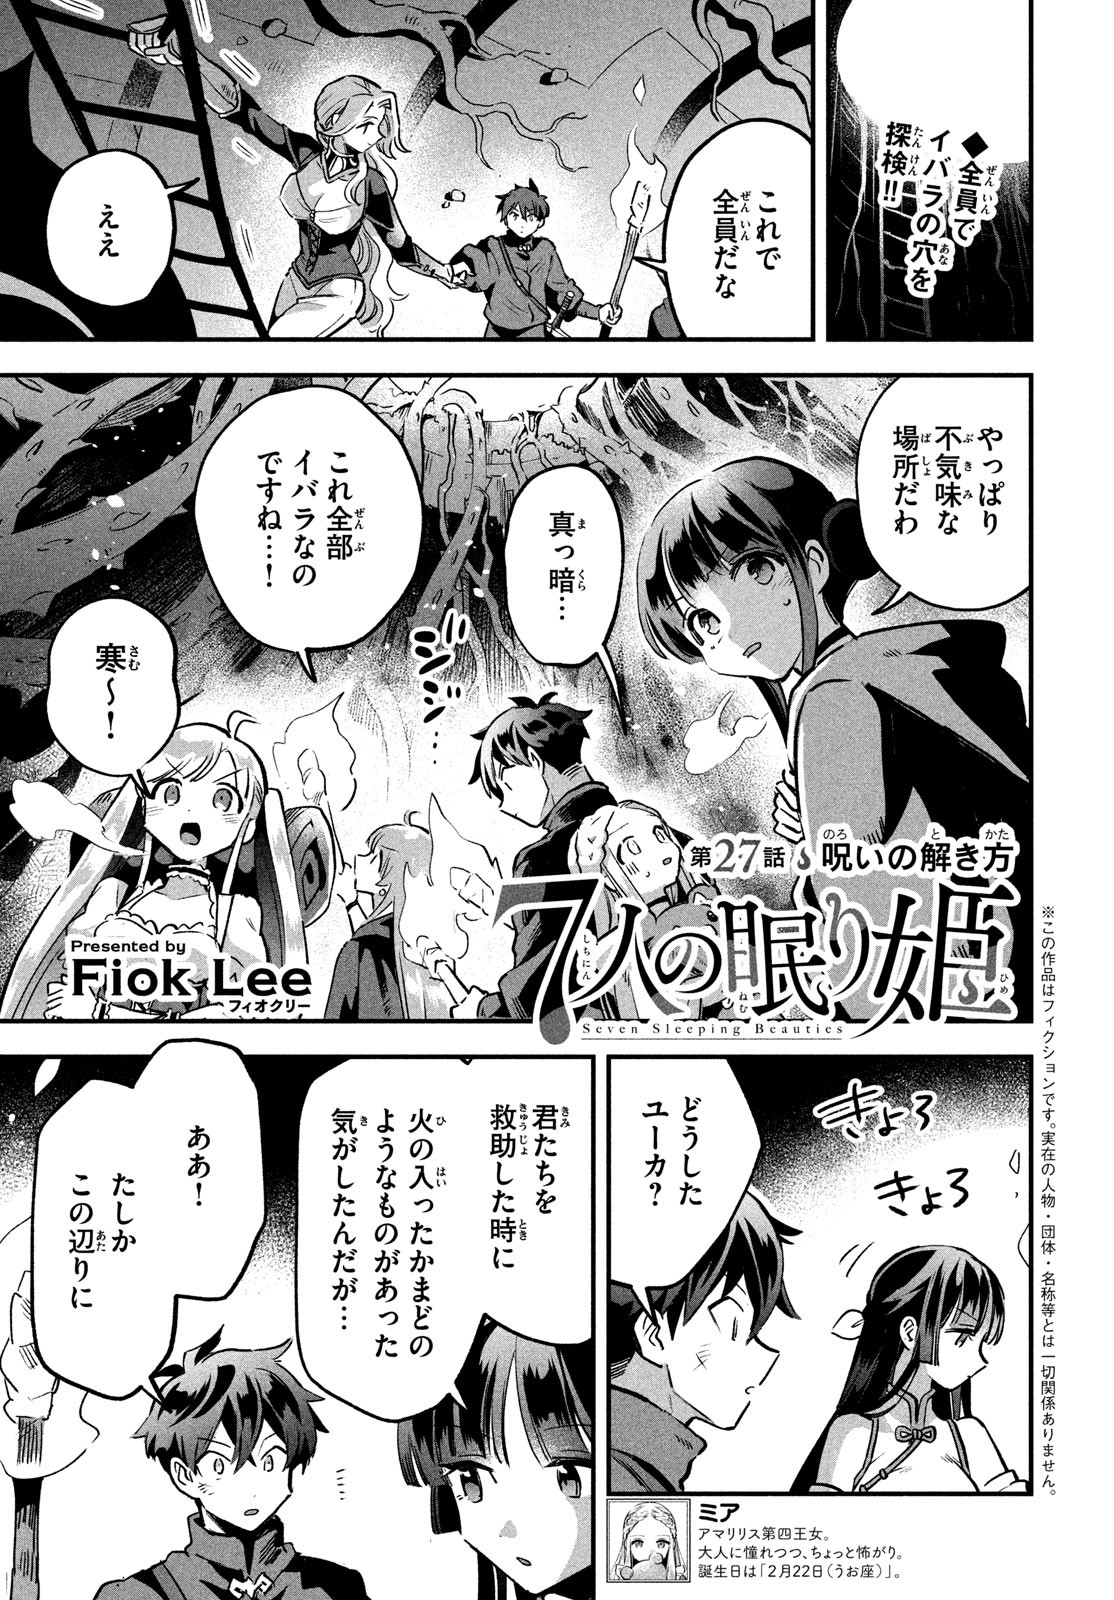 7-nin no Nemuri Hime - Chapter 27 - Page 1